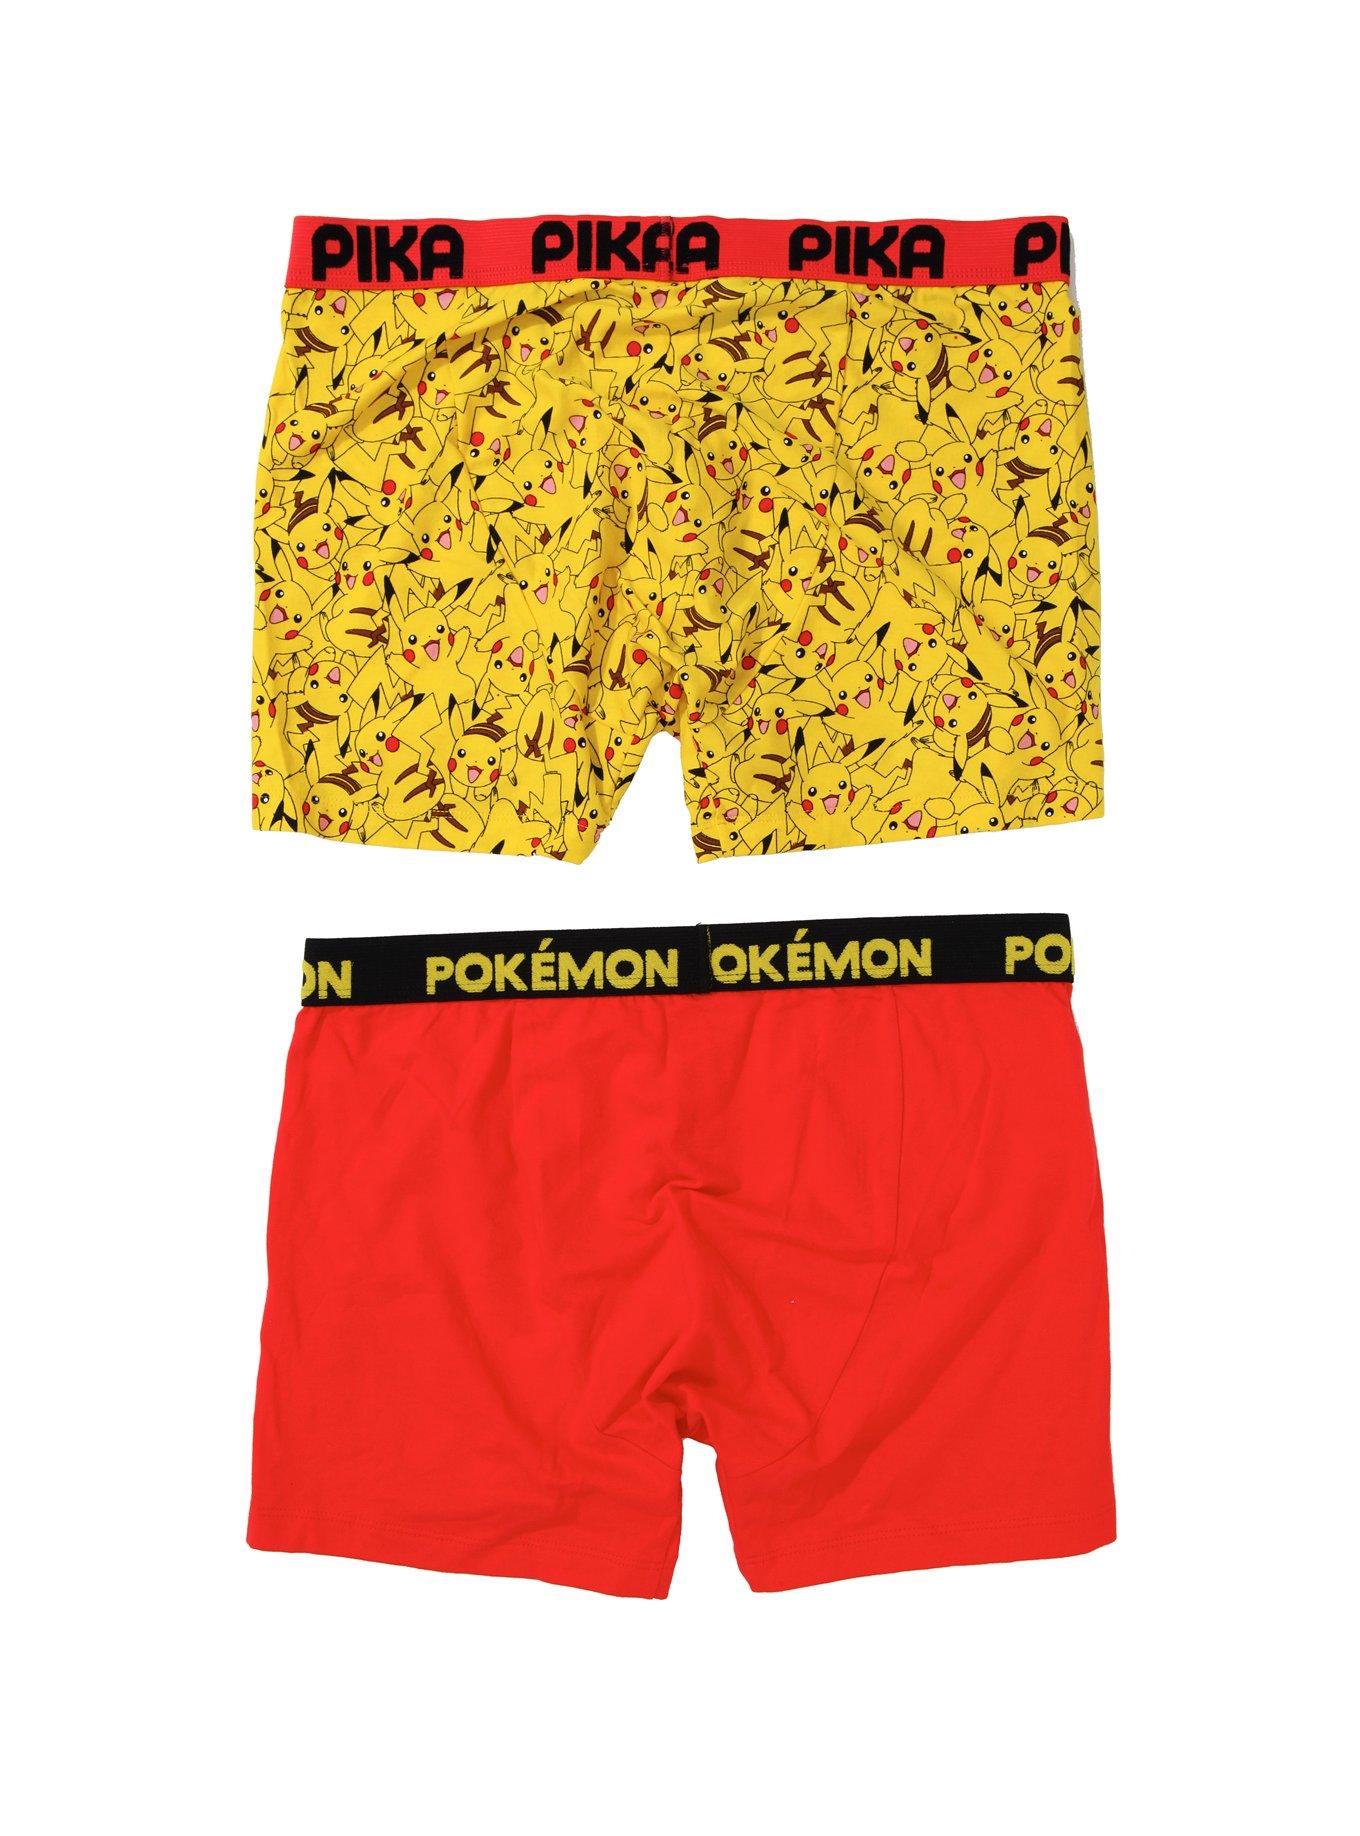 Pokemon Pikachu Boxer Briefs, Hot Topic